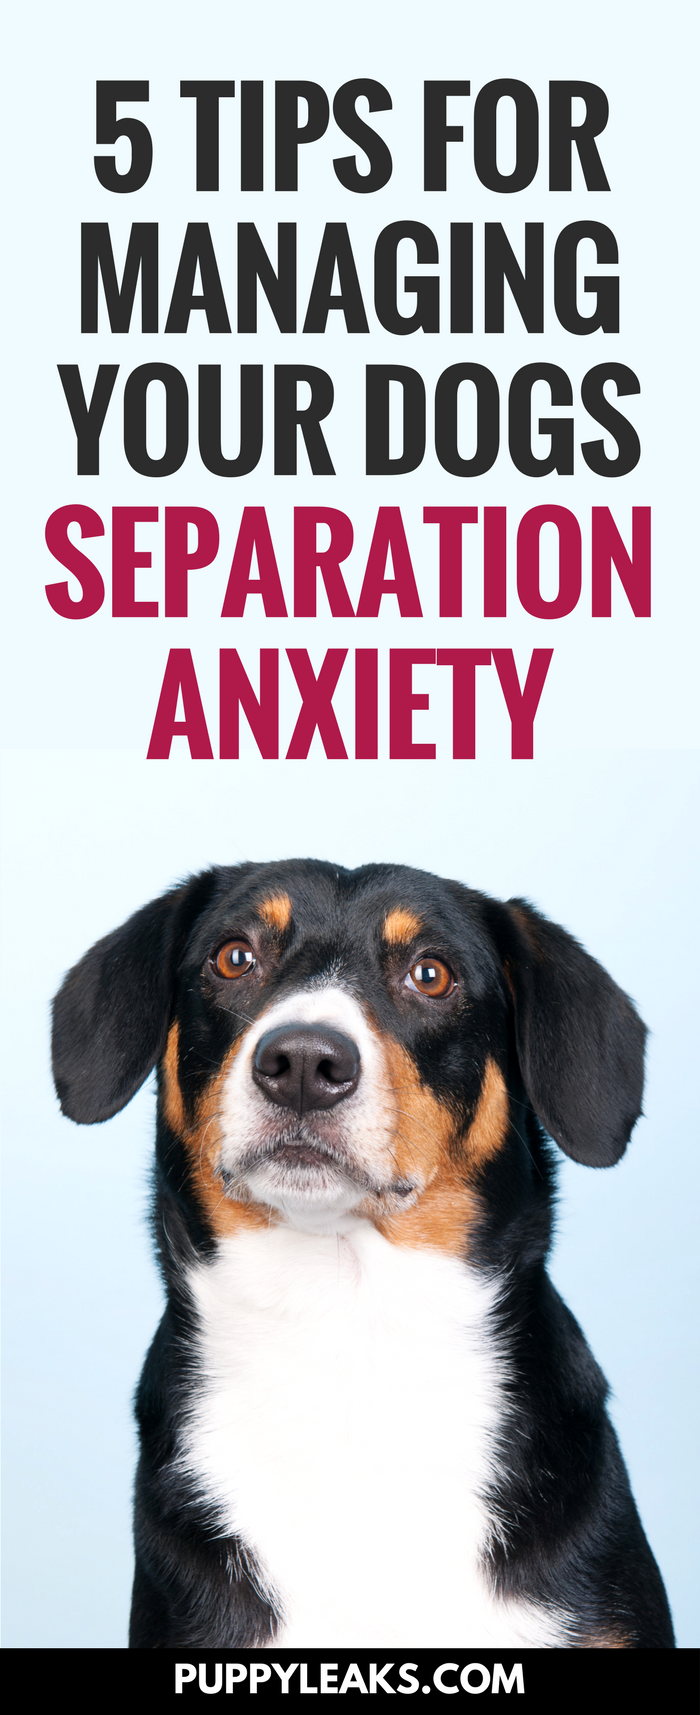 5 consigli per gestire l ansia da separazione canina